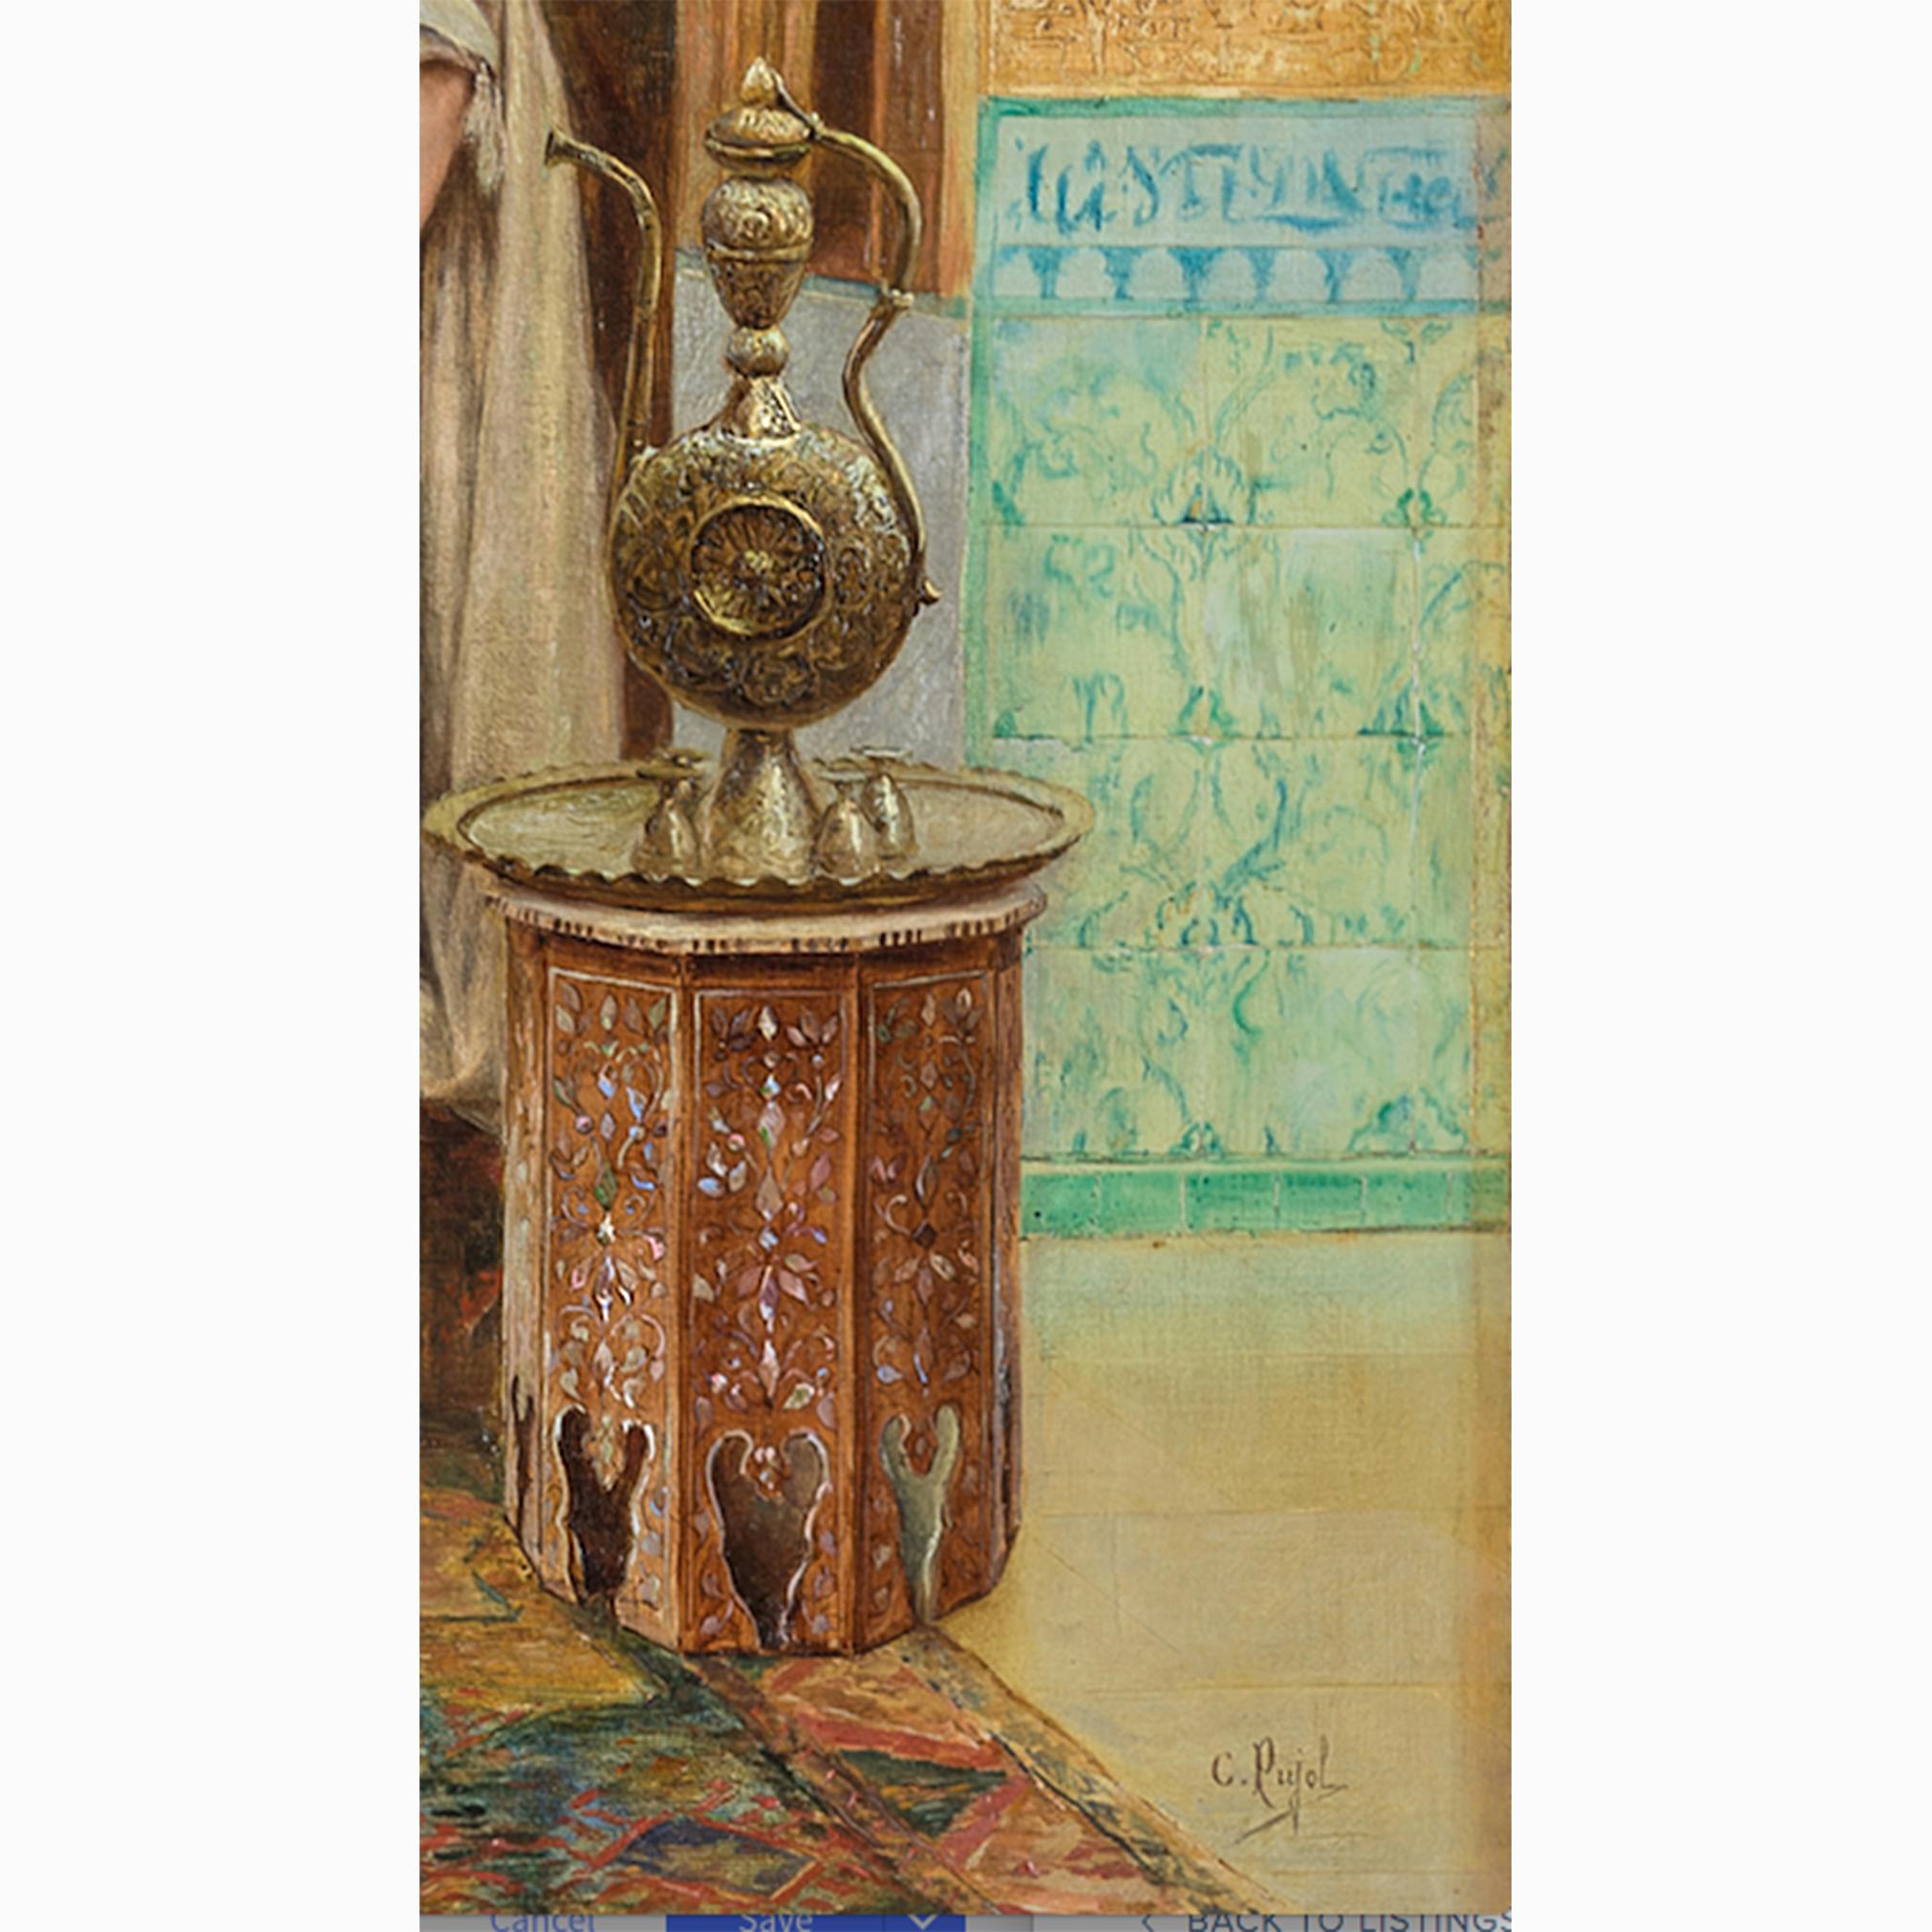 Künstler: Clemente Pujol de Guastavino (1850-1905)

Herkunft: Spanisch

Signatur: signiert C. Pujol (unten rechts)

Medium: Öl auf Leinwand

Abmessungen: 25 1/2 Zoll x 19 3/4 Zoll.   Gerahmt 34 x 28¼ Zoll; 86,5 x 72 cm